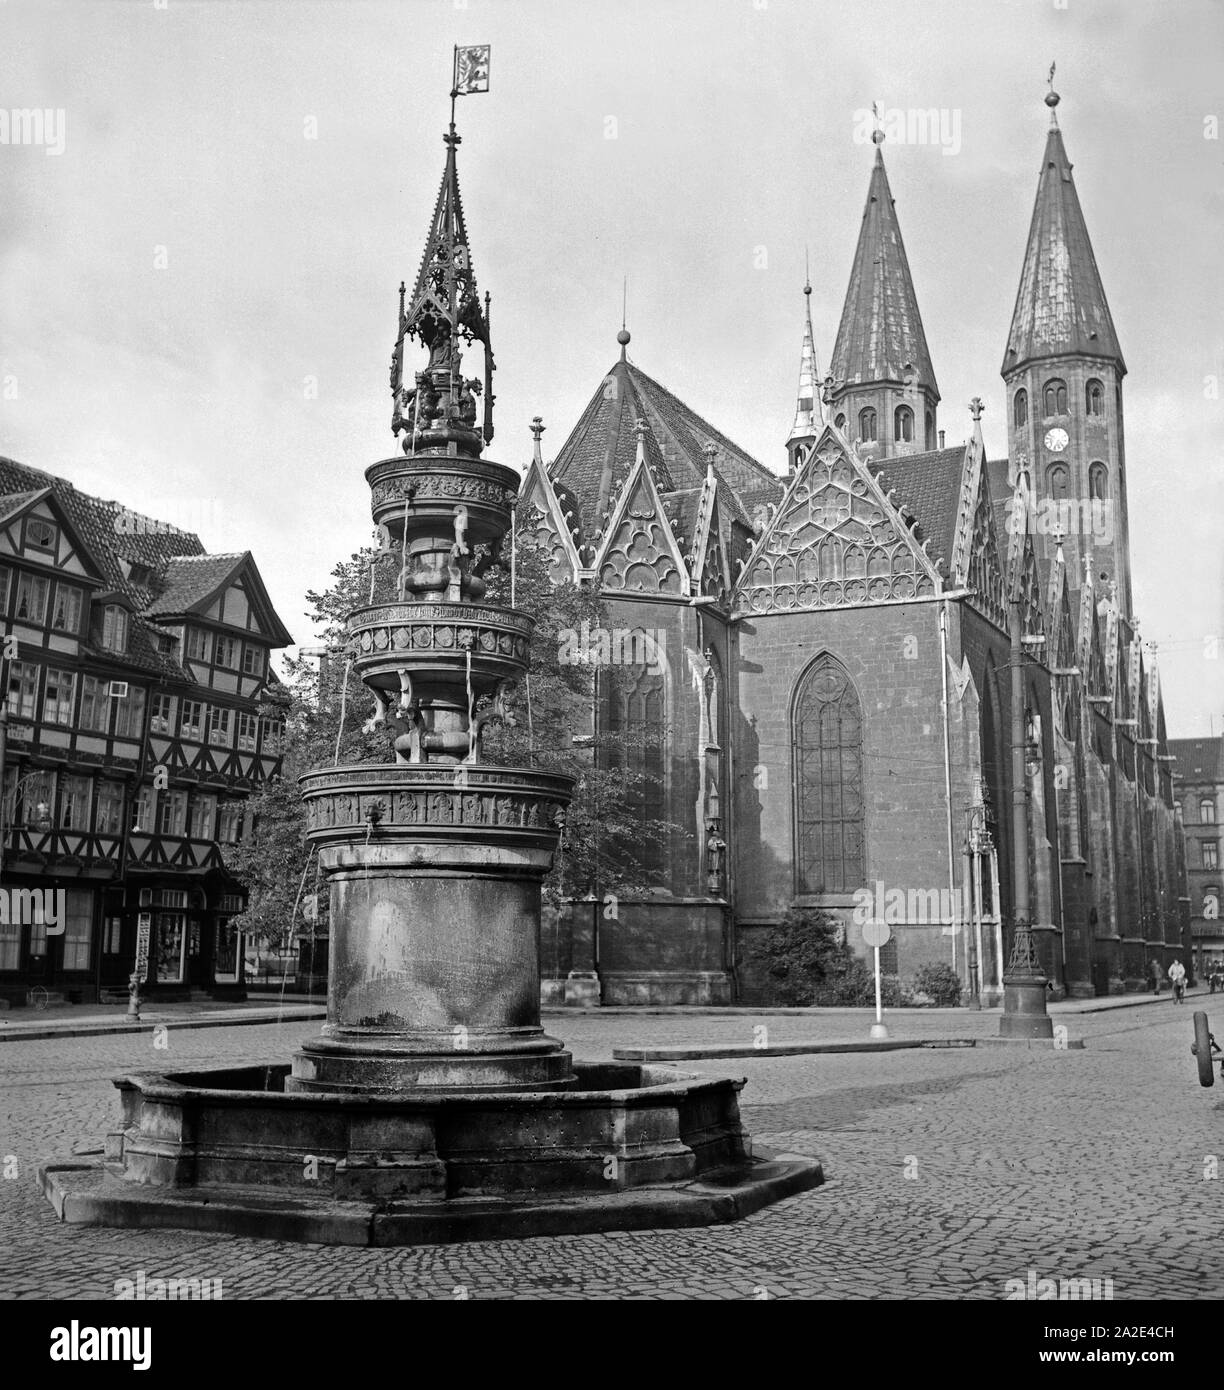 Die Martinikirche mit dem Altstadtmarktbrunnen in Braunschweig, Deutschland 1930er Jahre. La chiesa di San Martino con la fontana della vecchia città di mercato a Braunschweig, Germania 1930s. Foto Stock